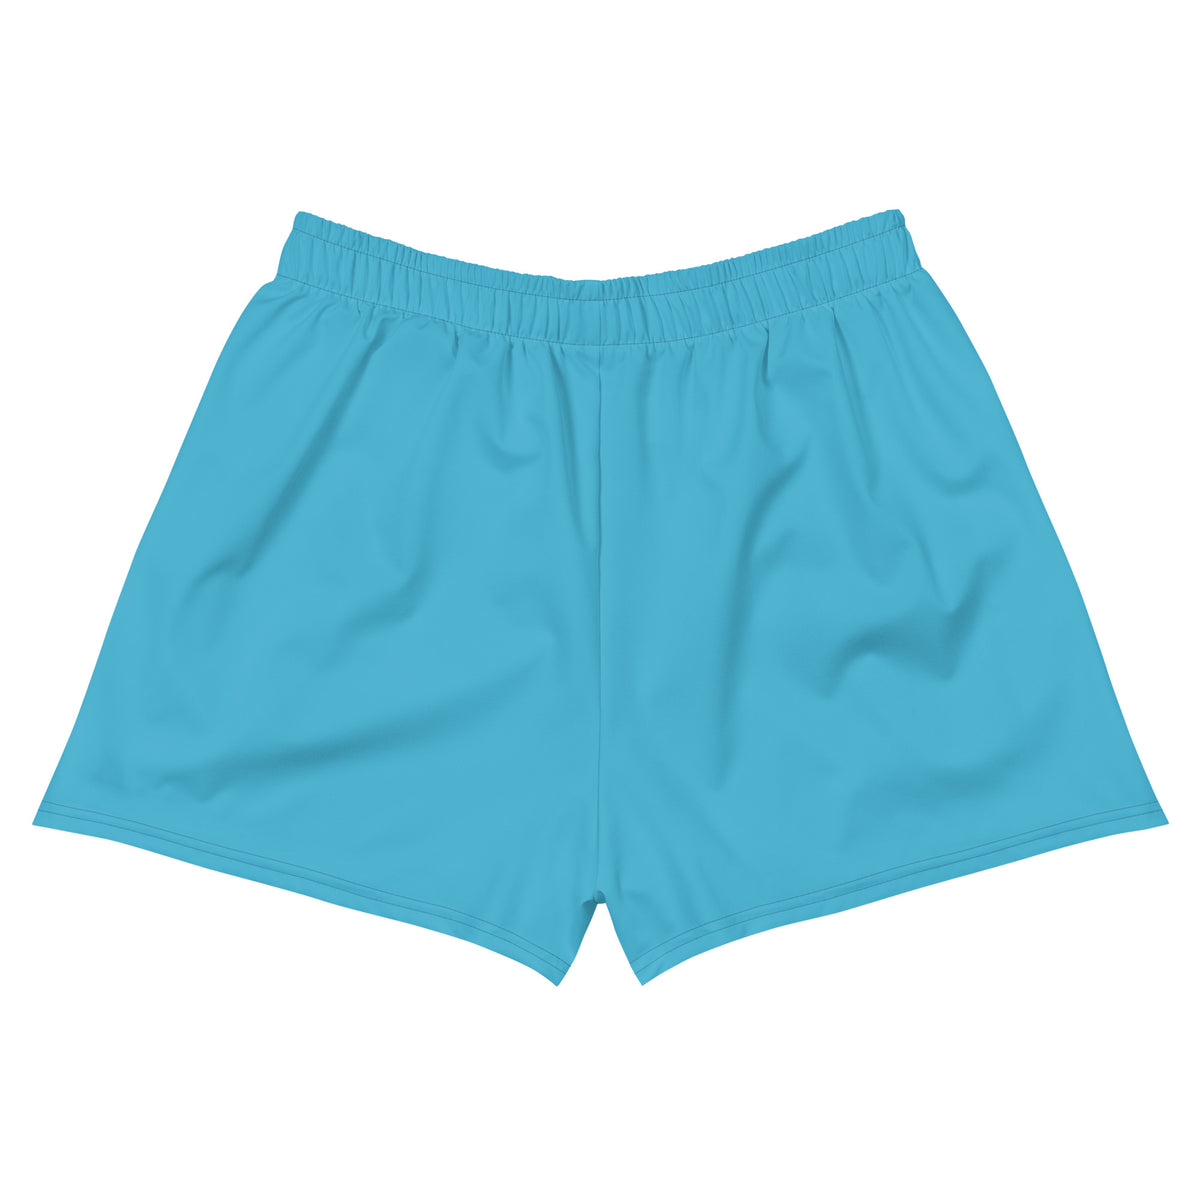 Blue mm Athletic Shorts